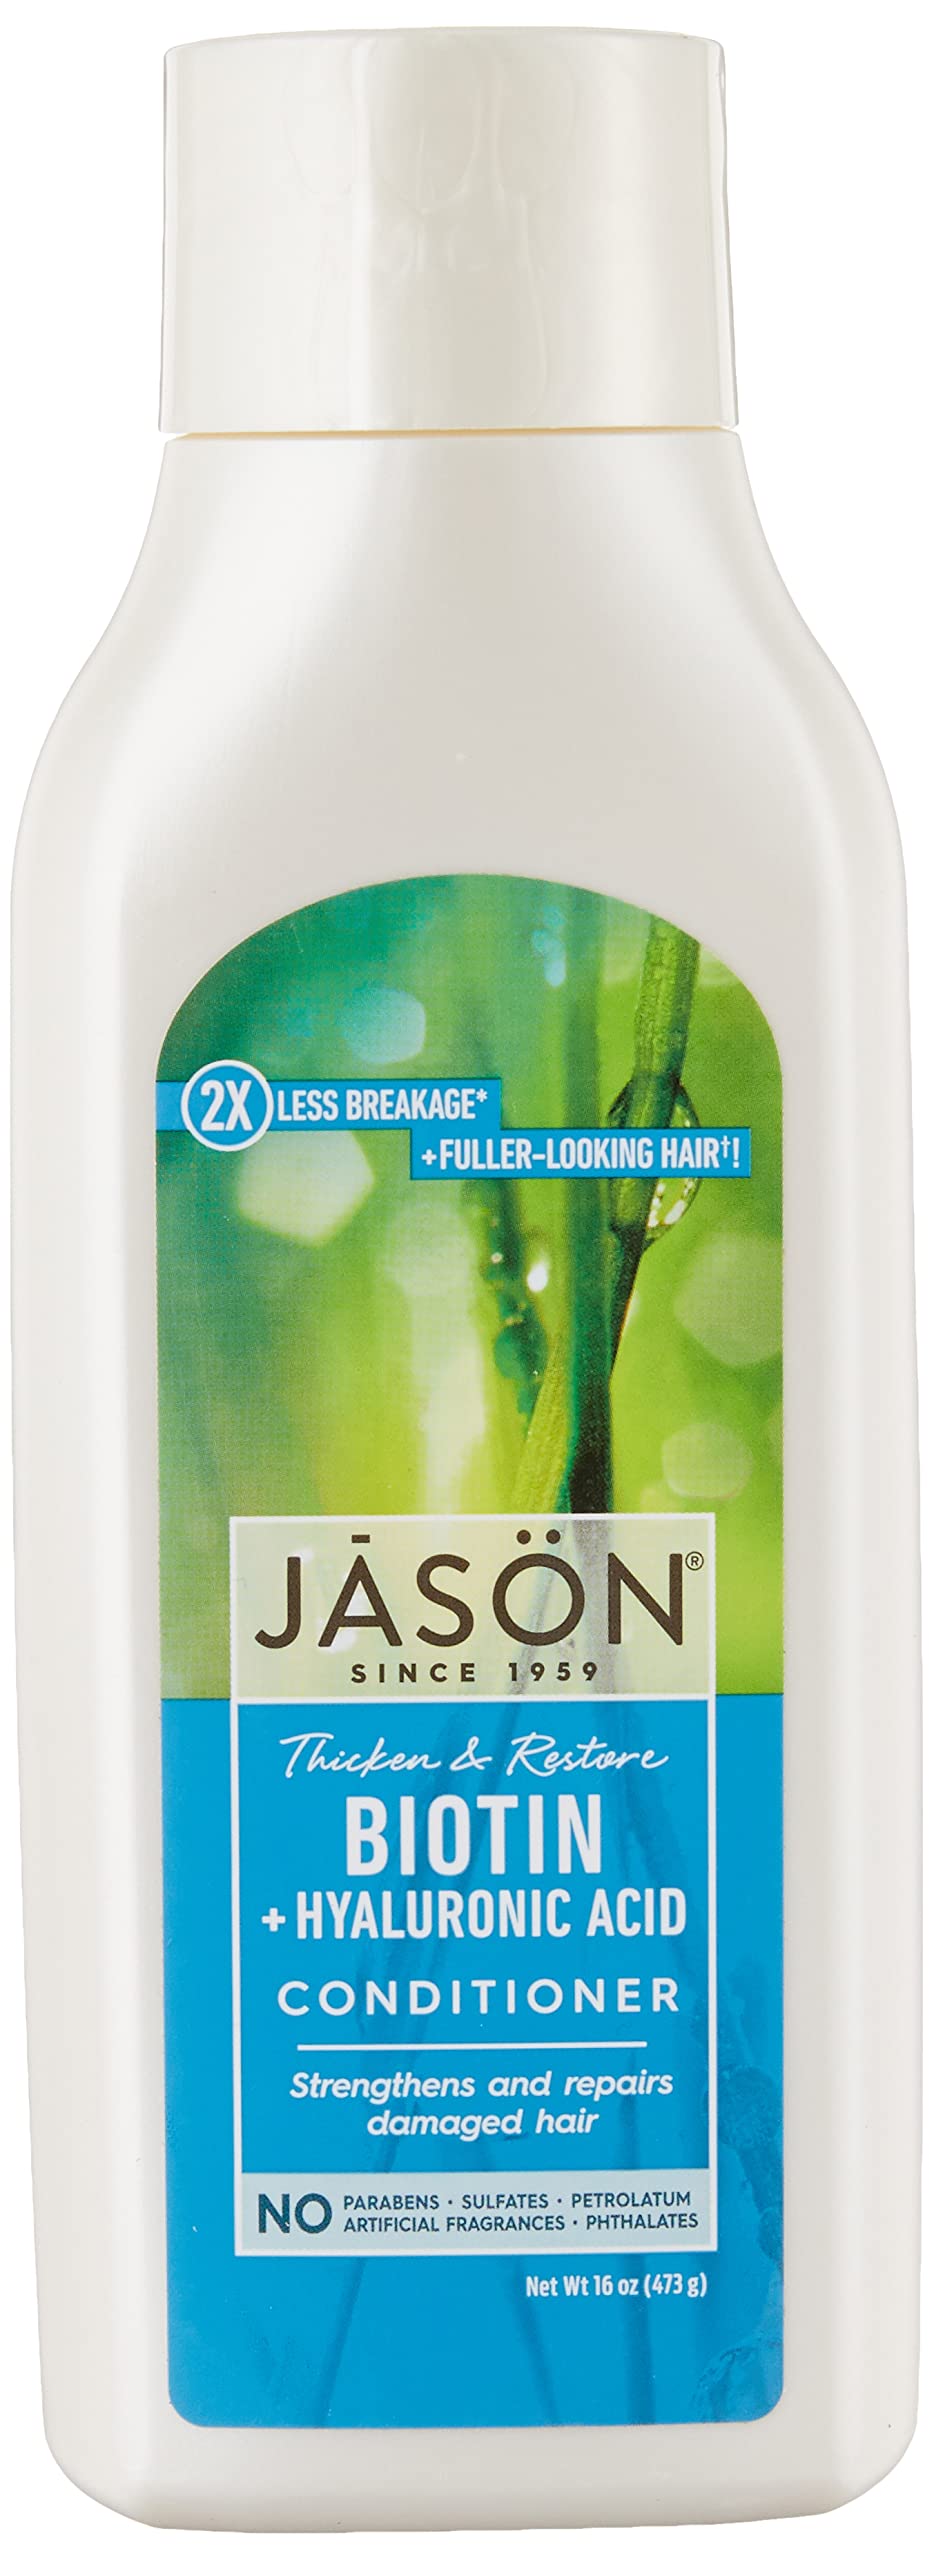 [Australia] - Jason Conditioner, Thicken & Restore Biotin and Hyaluronic Acid, 16 Oz 